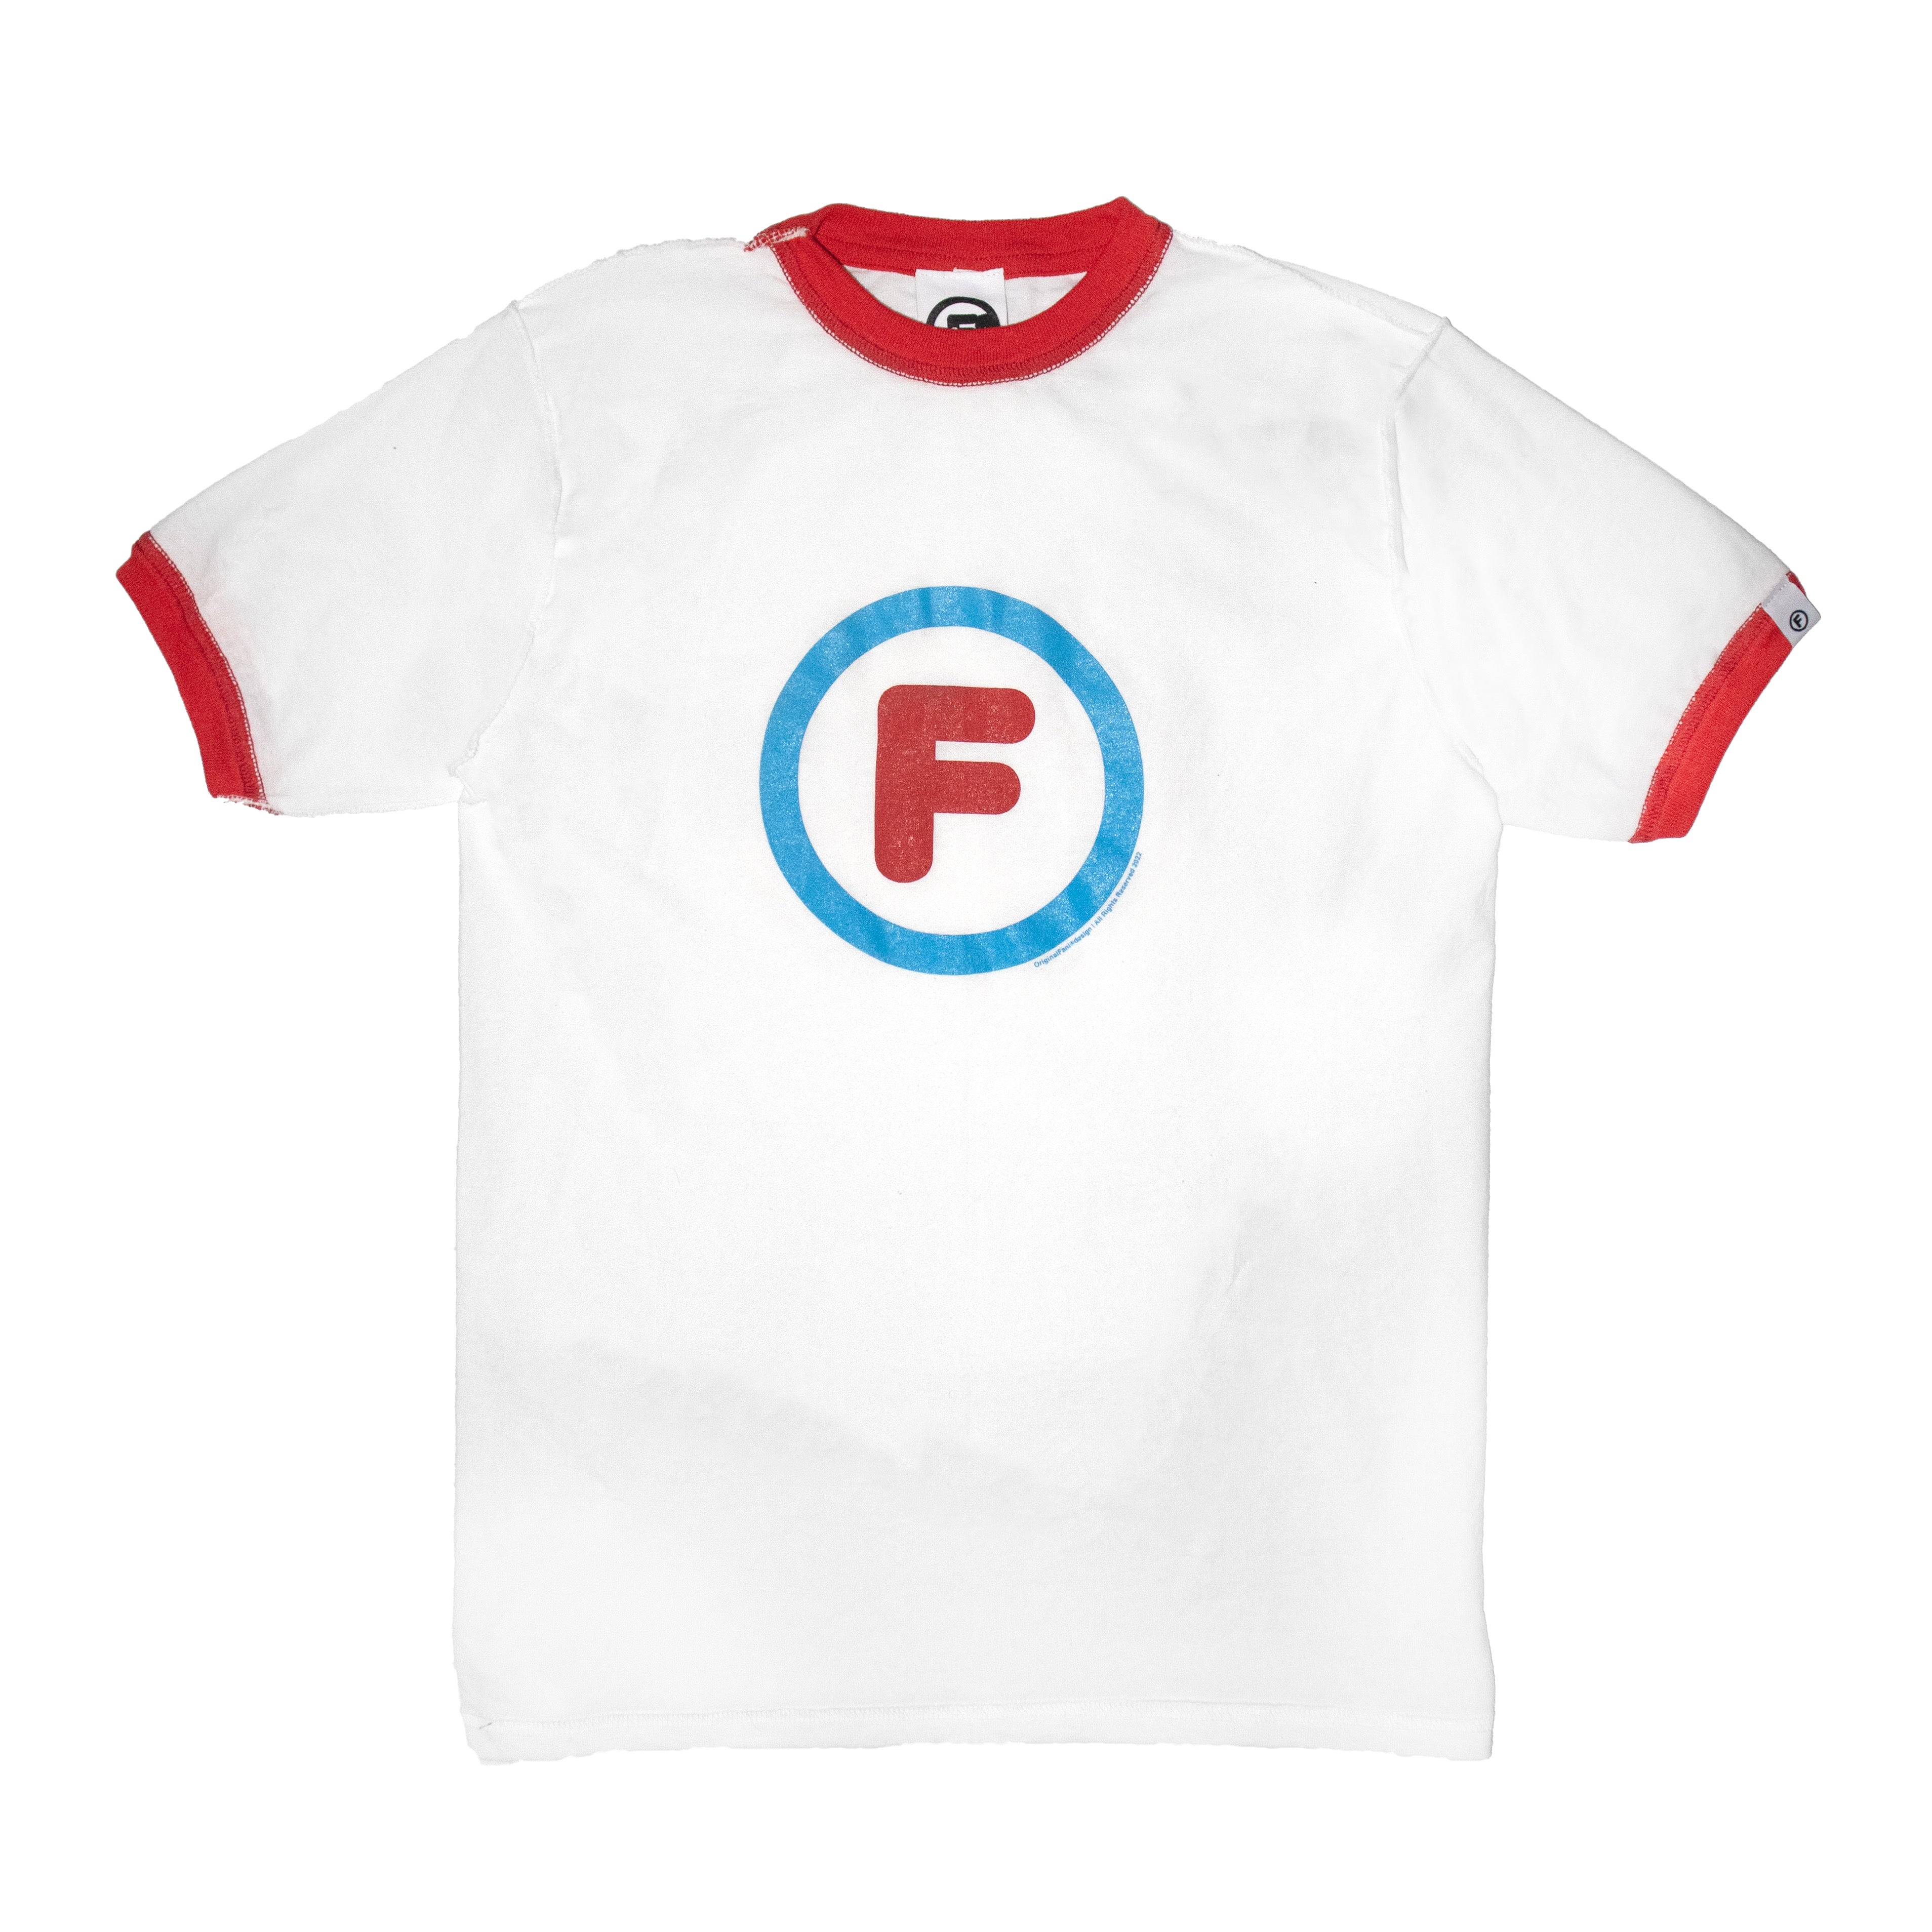 OriginalFani®design "Who" Ringer T-Shirt (Red)